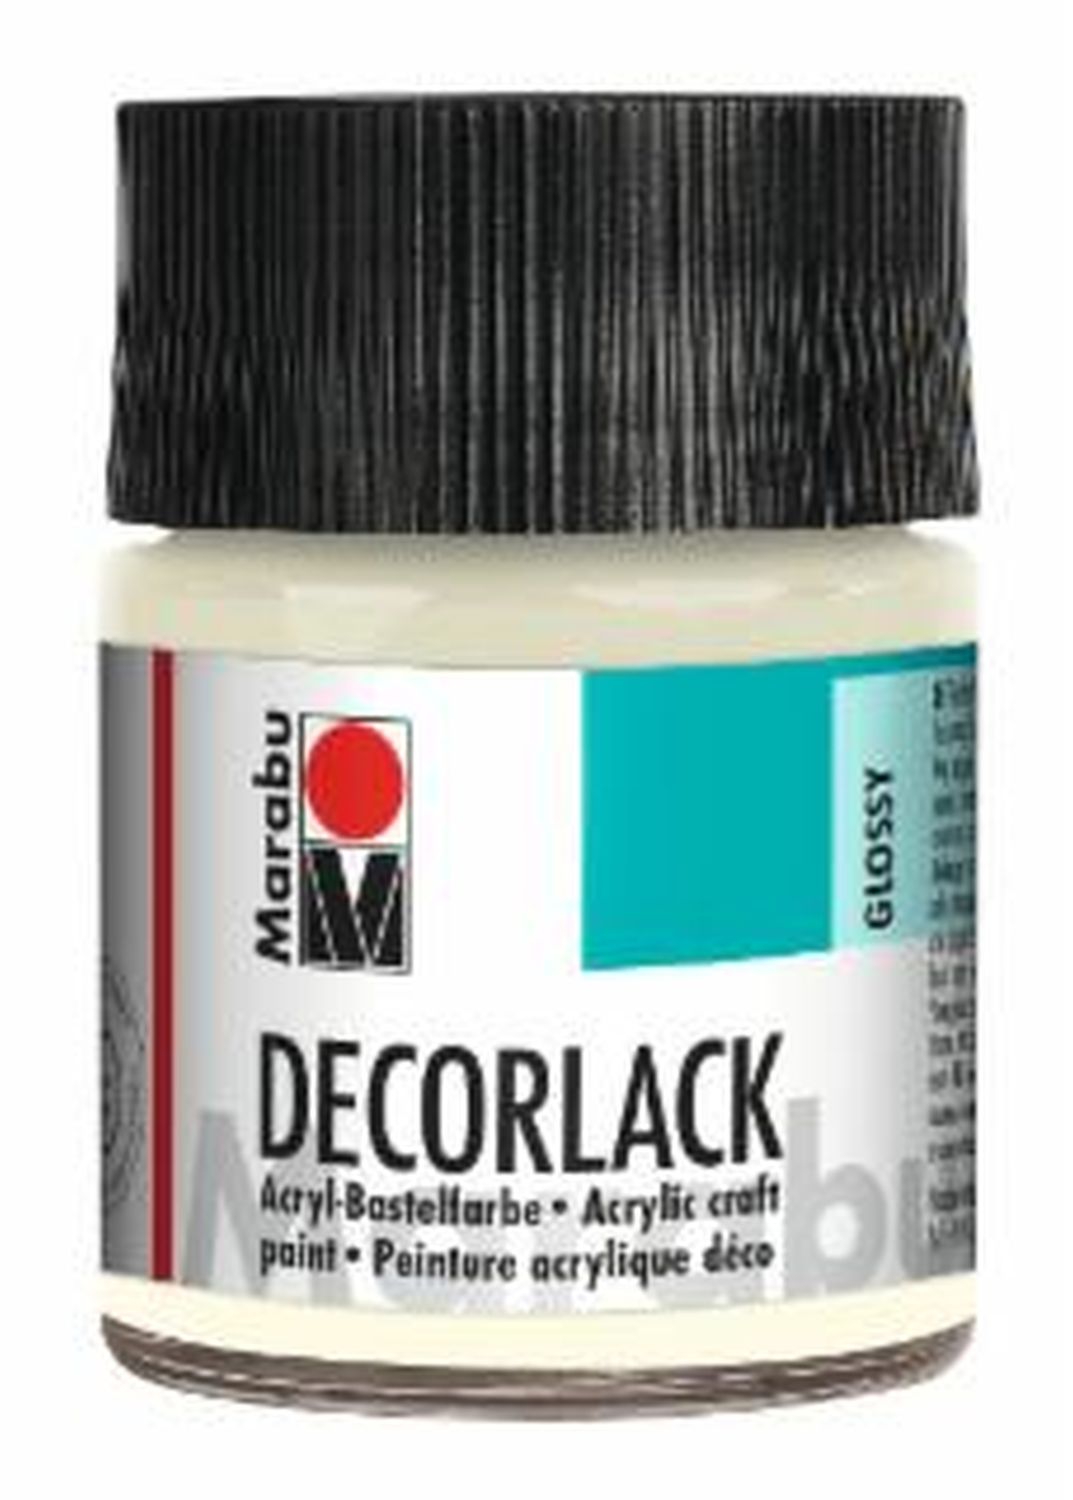 Decorlack Acryl - Farblos 100, 50 ml